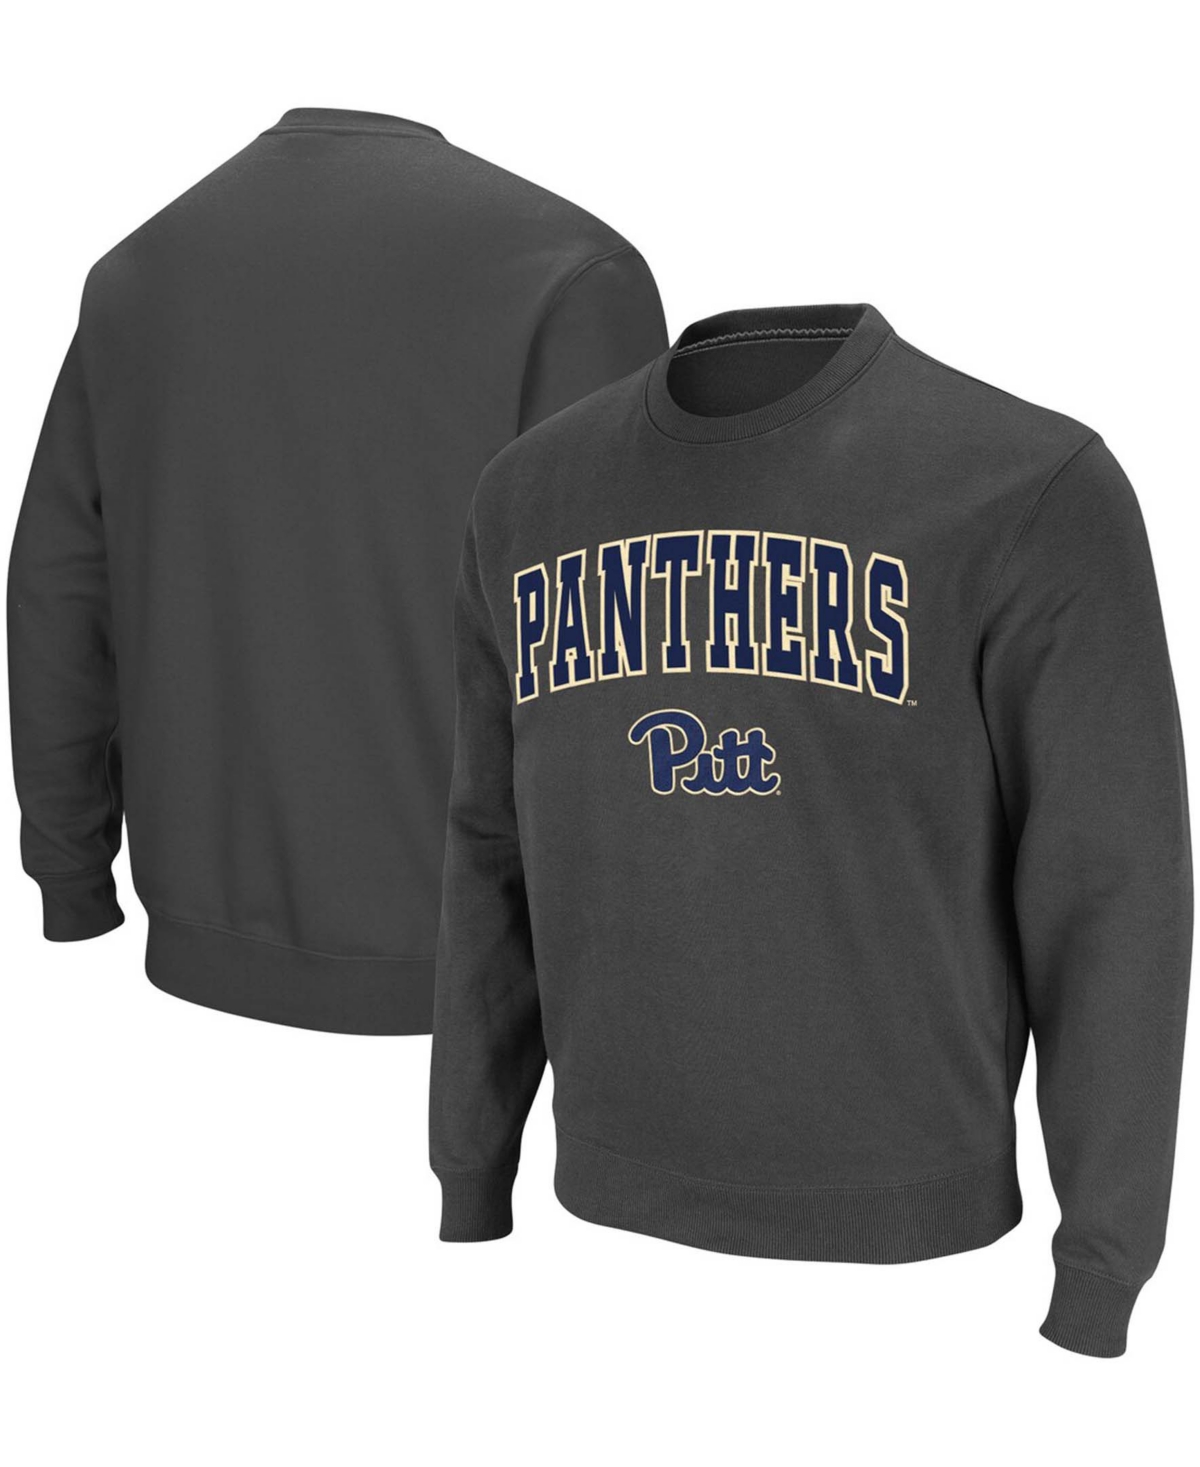 Colosseum Men's Charcoal Pitt Panthers Arch Logo Sweatshirt